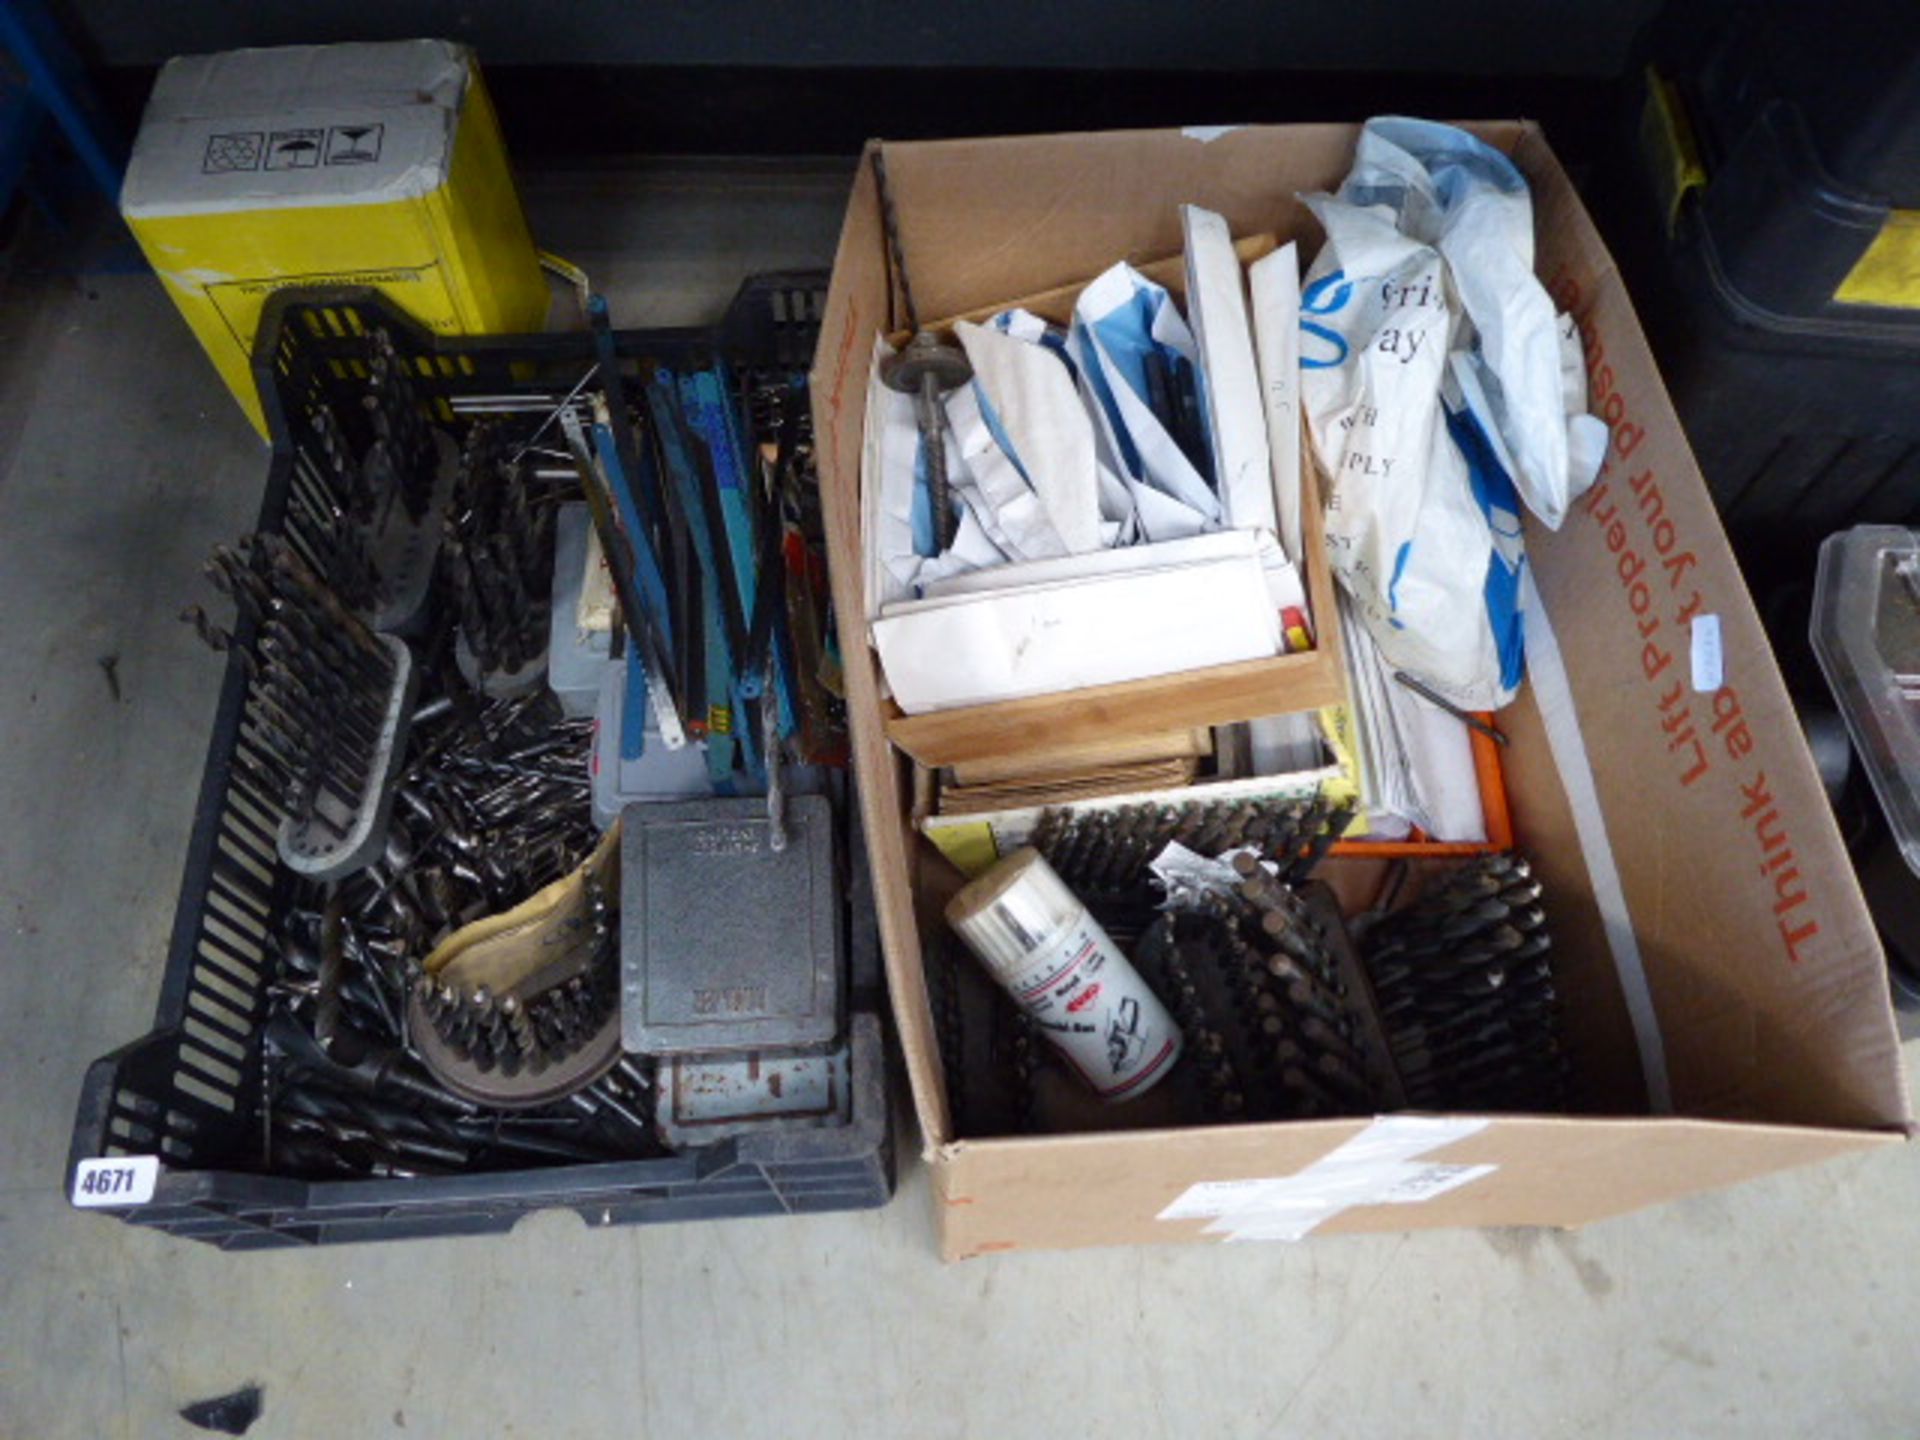 Tray and a box of various drill bits, hacksaw blades, etc